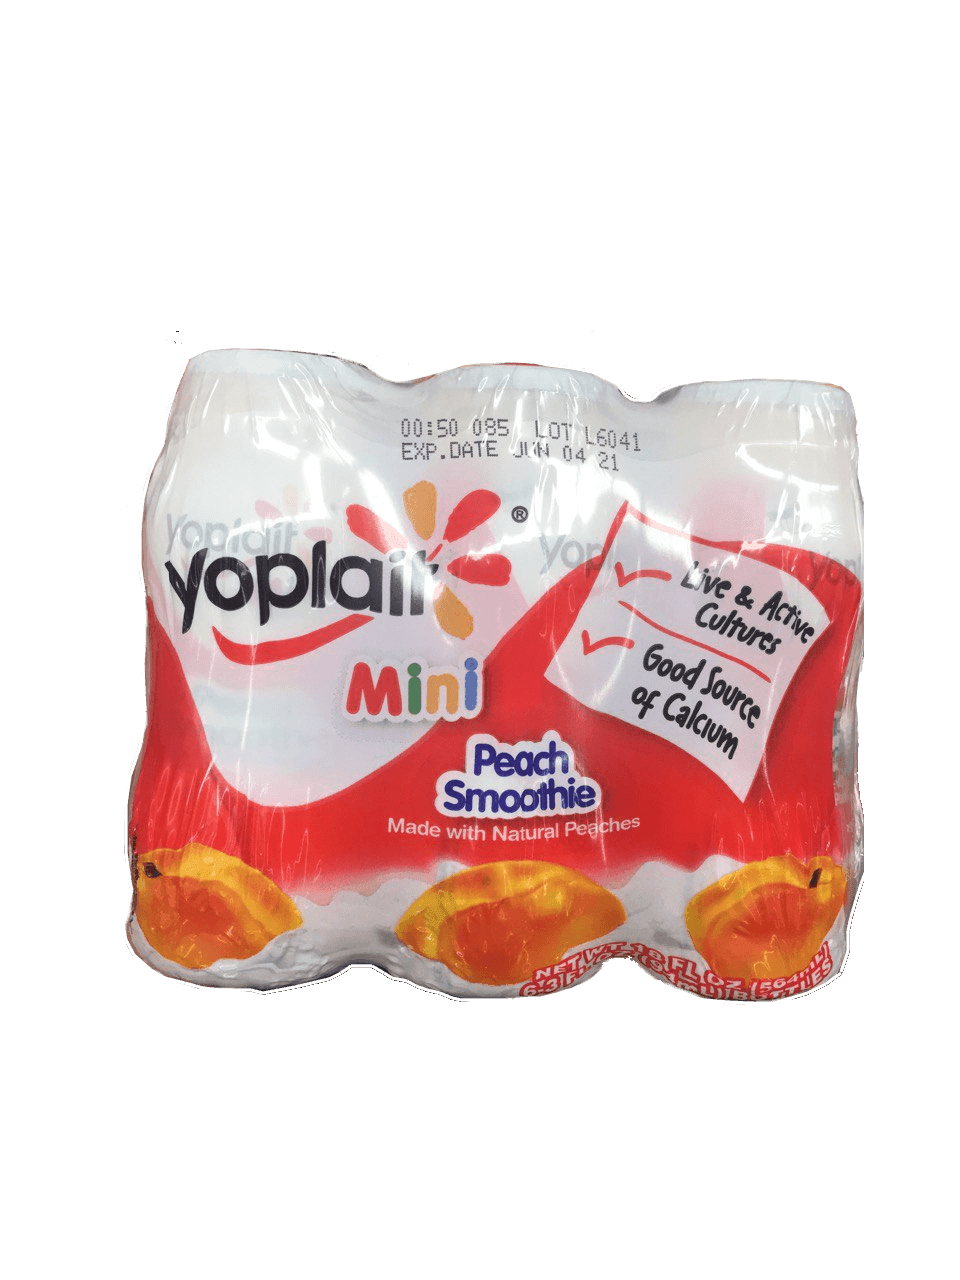 Yoplait - Mini Peach Smoothie 6pack 3oz Bottles